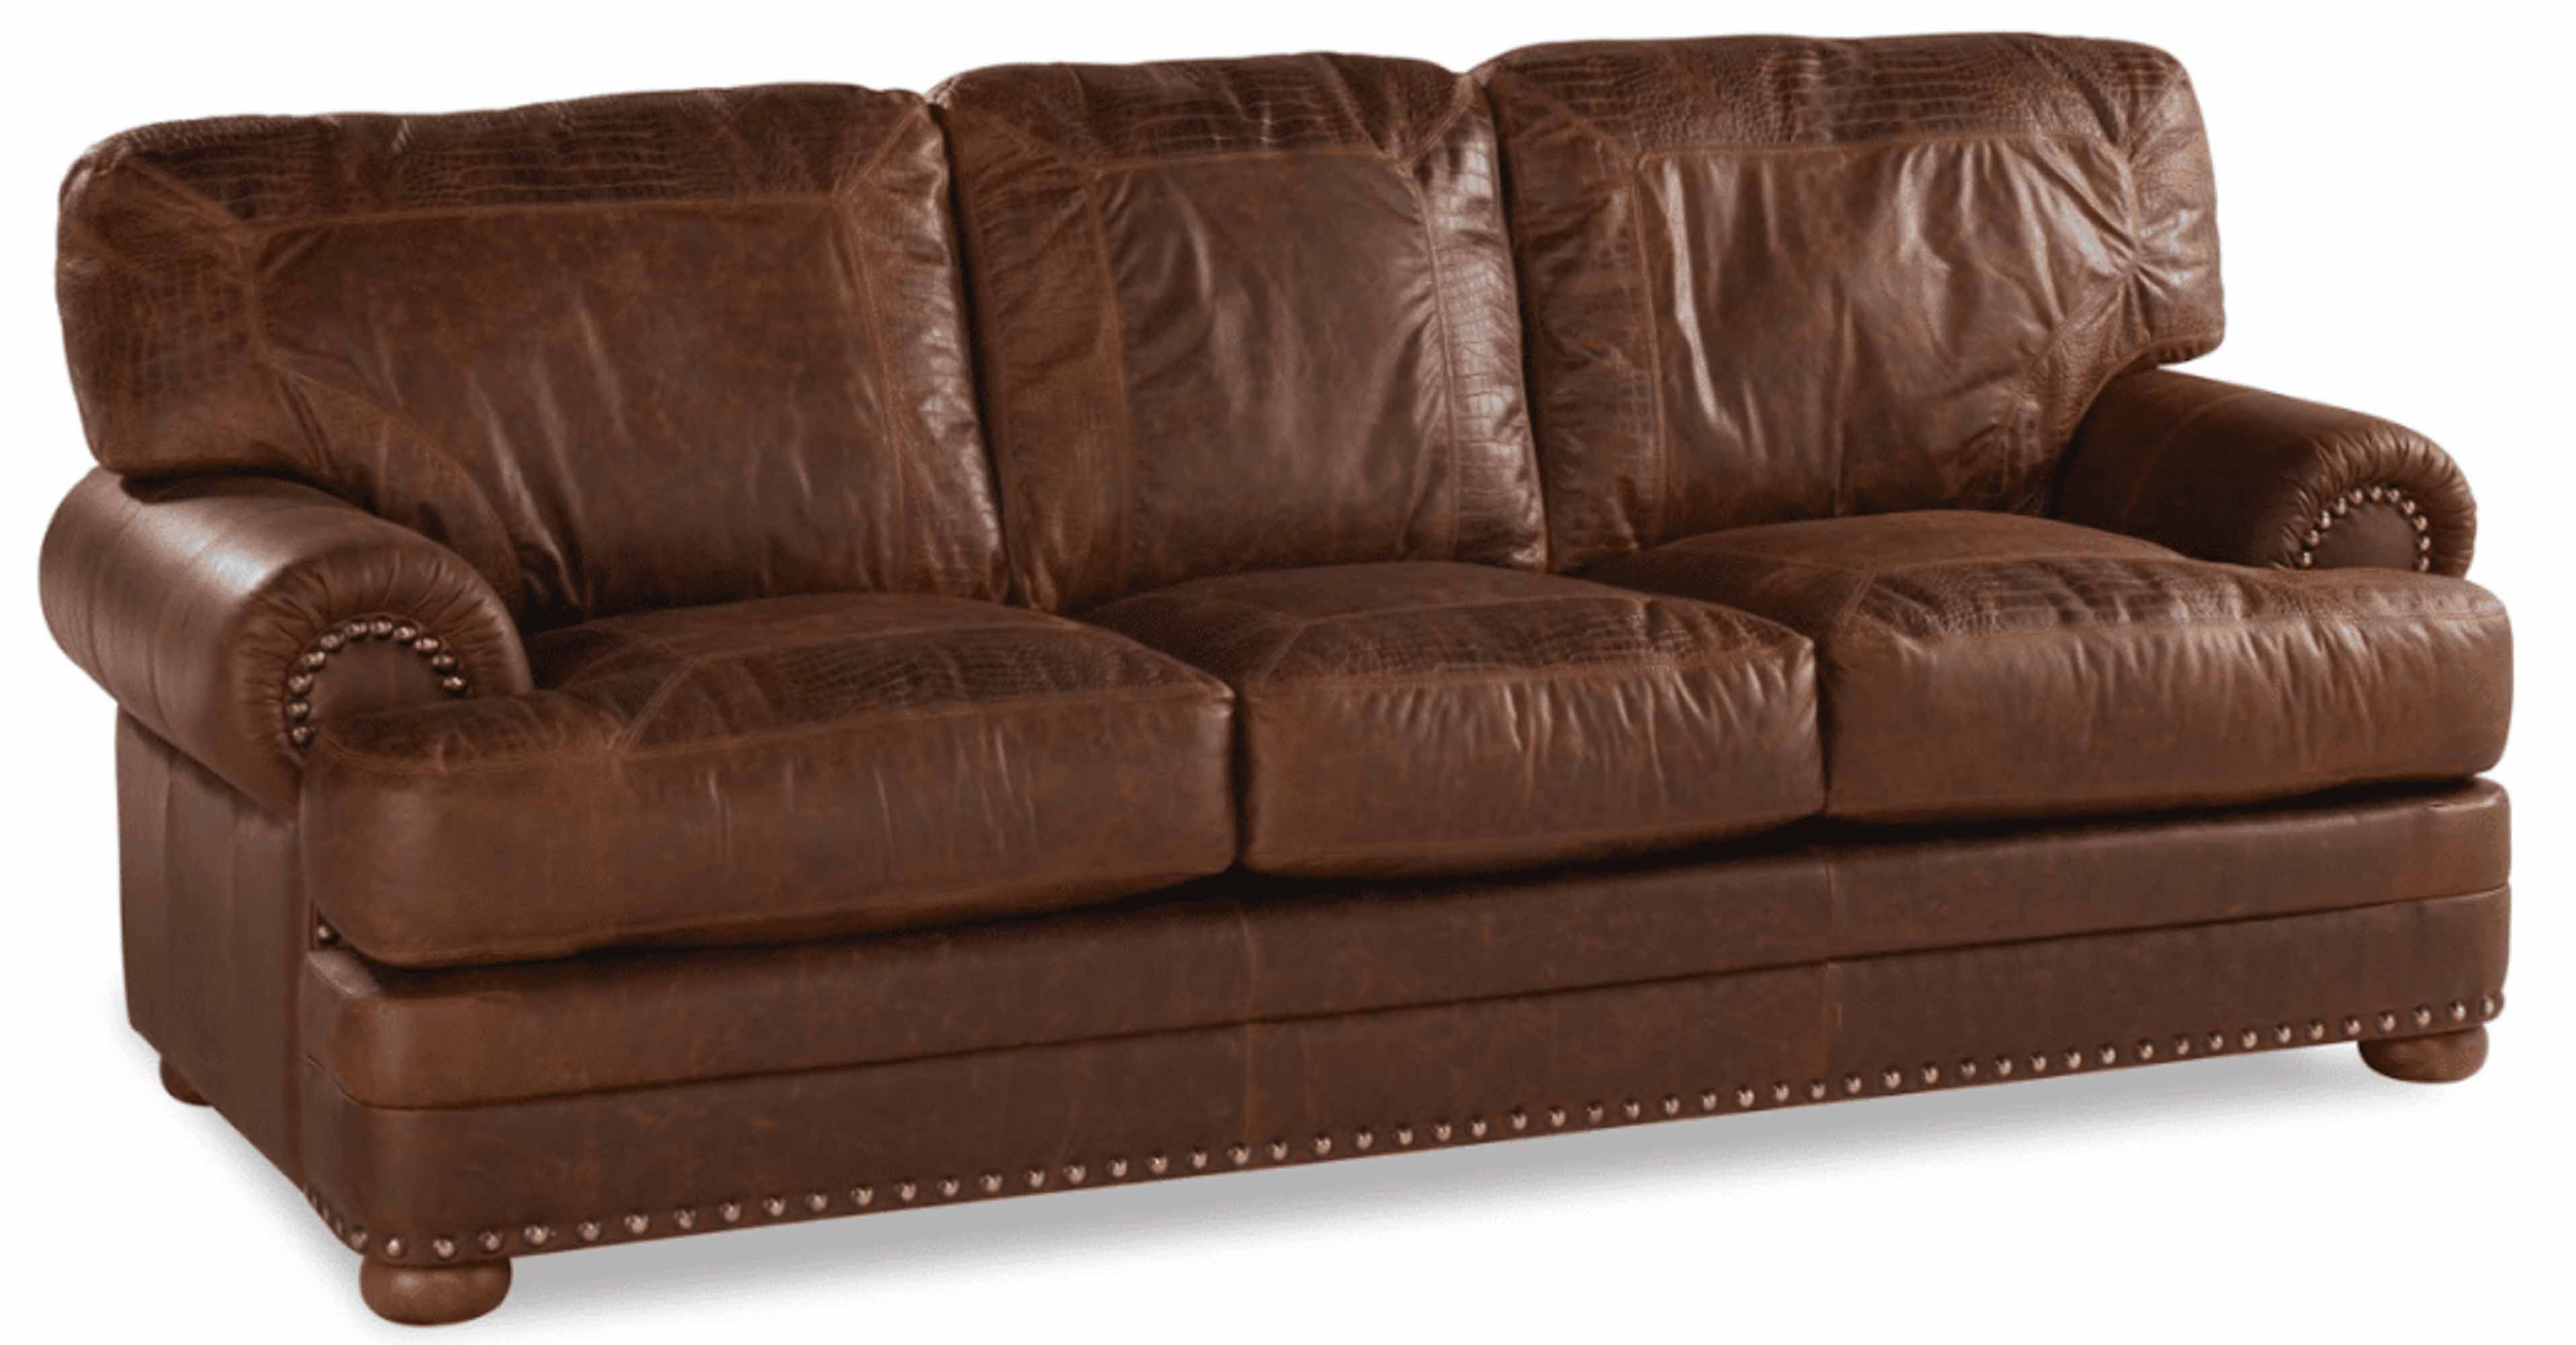 Houston Leather Queen Size Sofa Sleeper